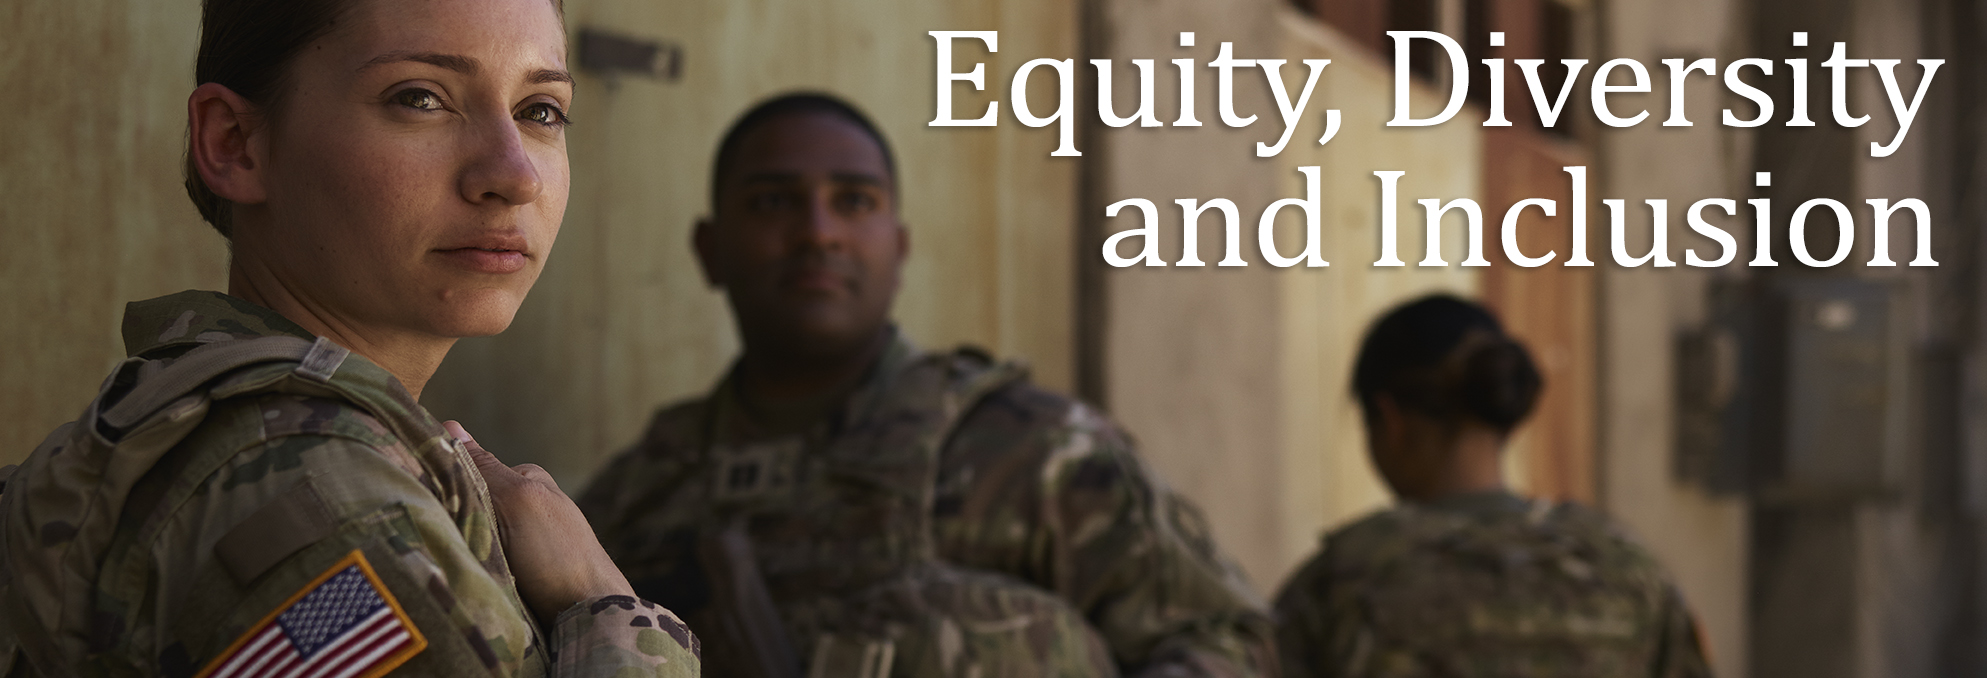 EDI equity diversity inclusion banner